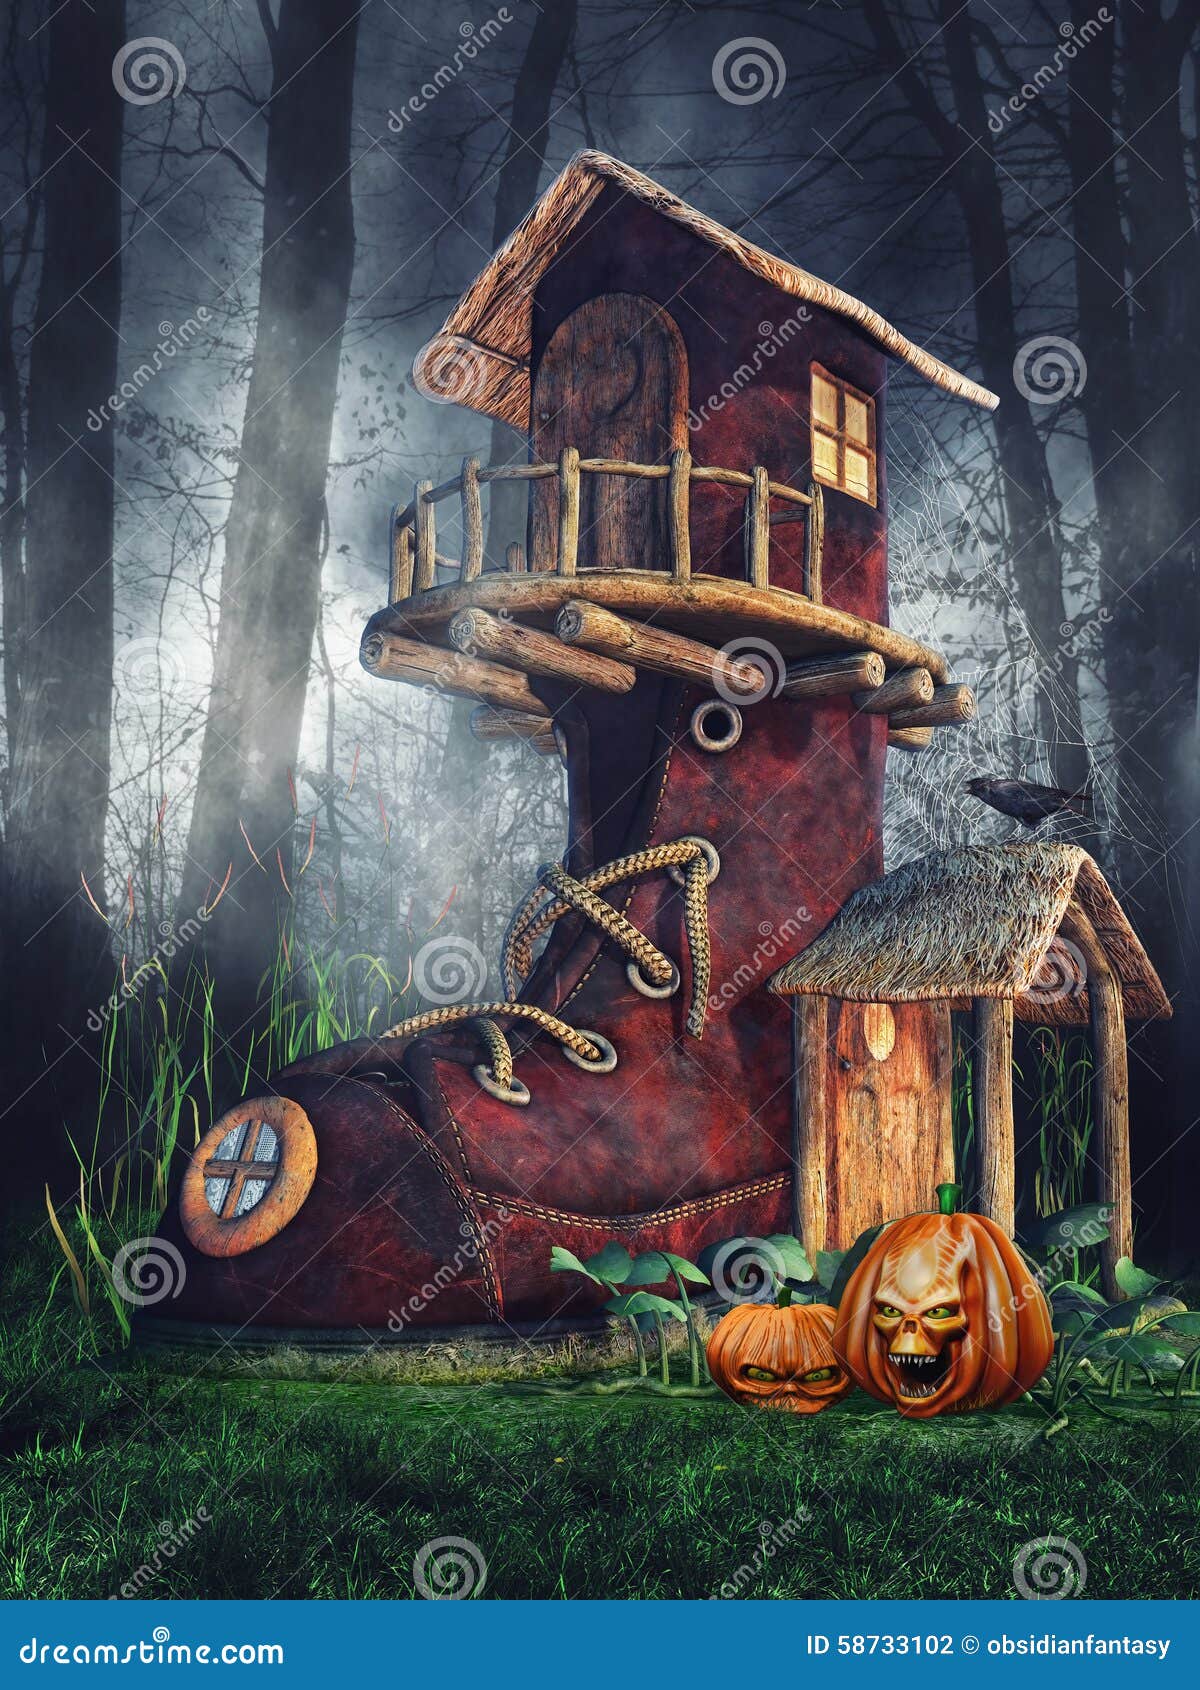 Shoe house with pumpkins stock illustration. Illustration of tree - 58733102